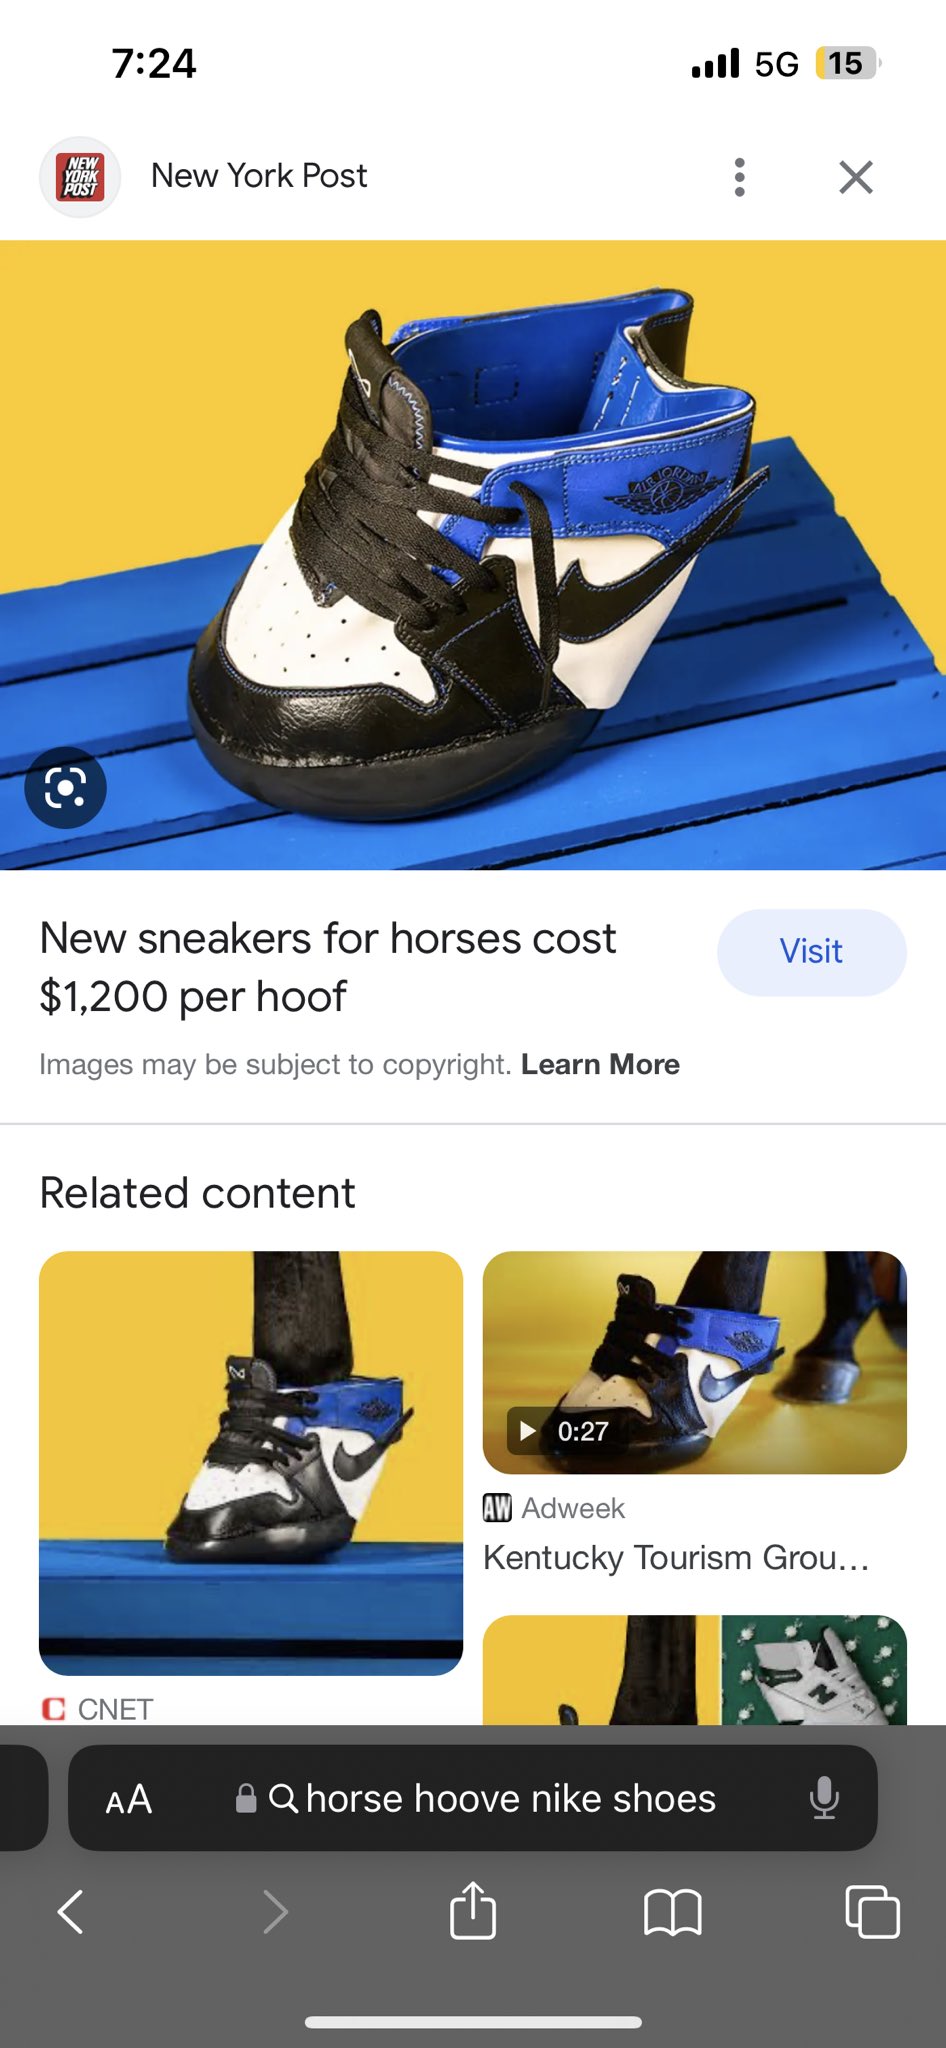 New sneakers for horses cost $1,200 per hoof